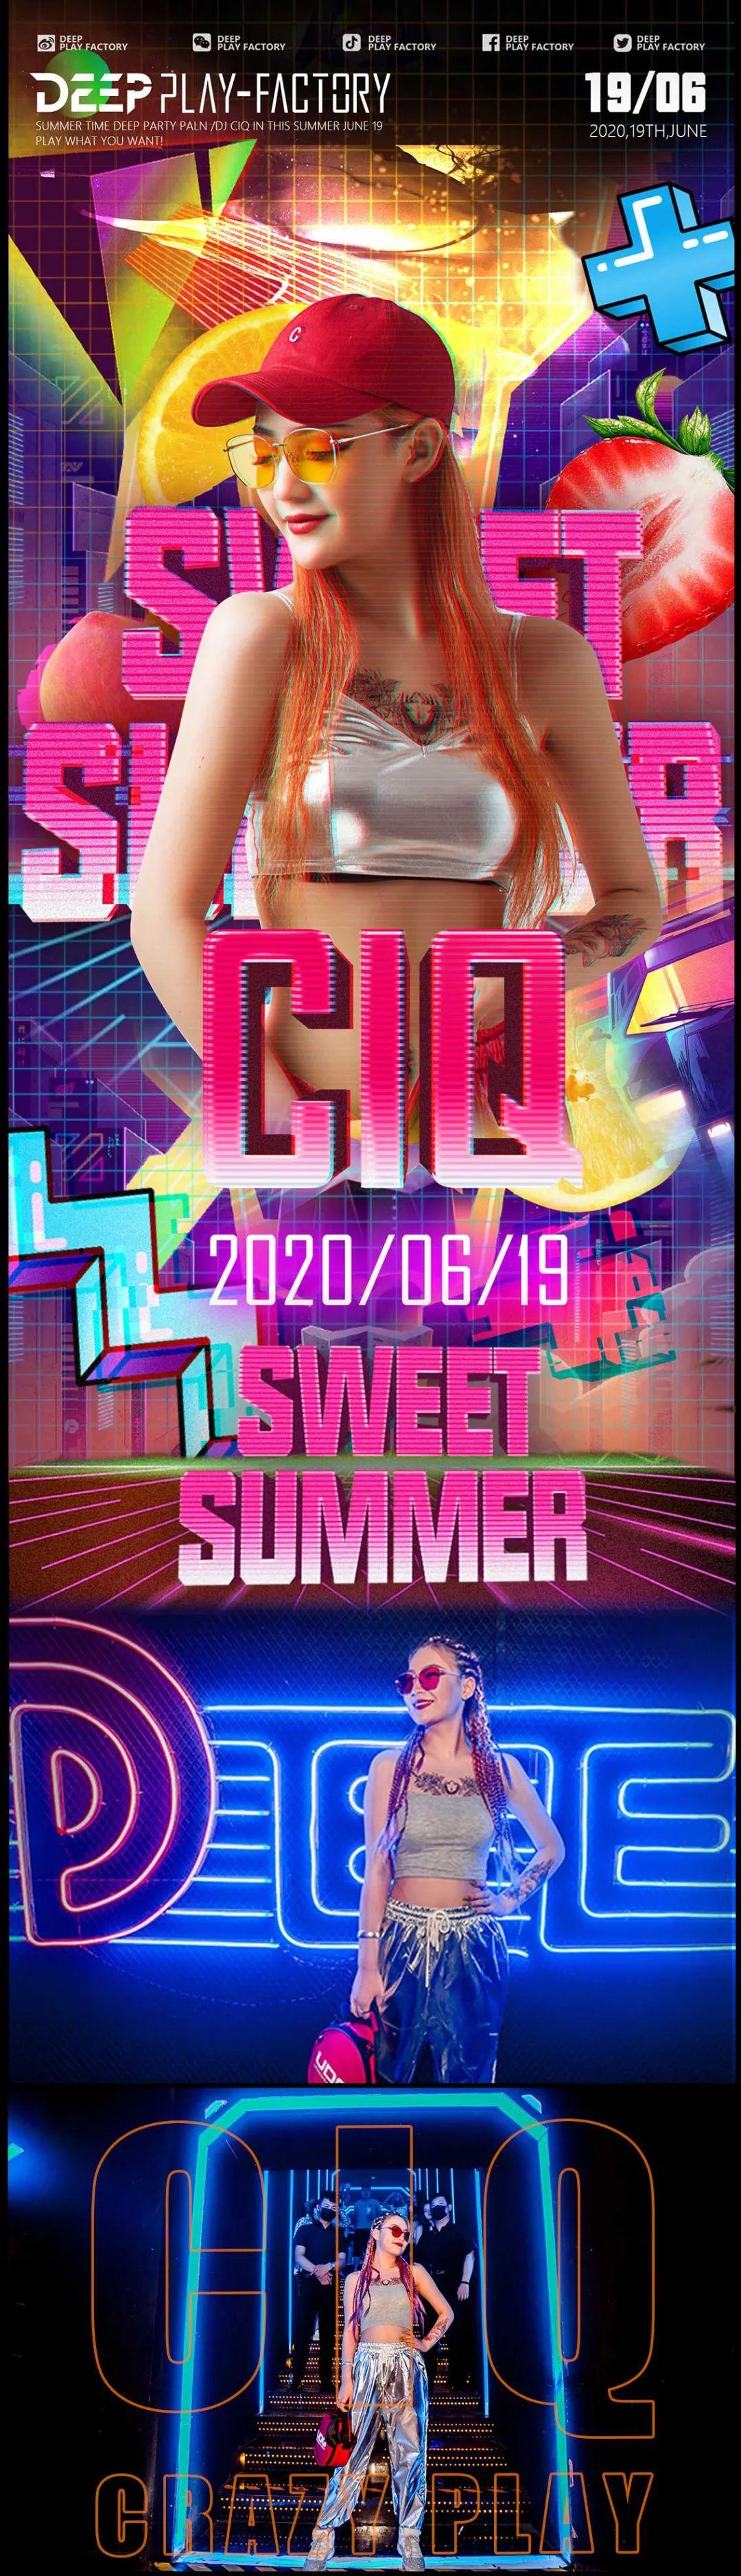 #SWEET SUMMER# DJ CIQ 音浪暴击 整夜上头-西安DEEP CLUB(蒂蒲酒吧) 西安